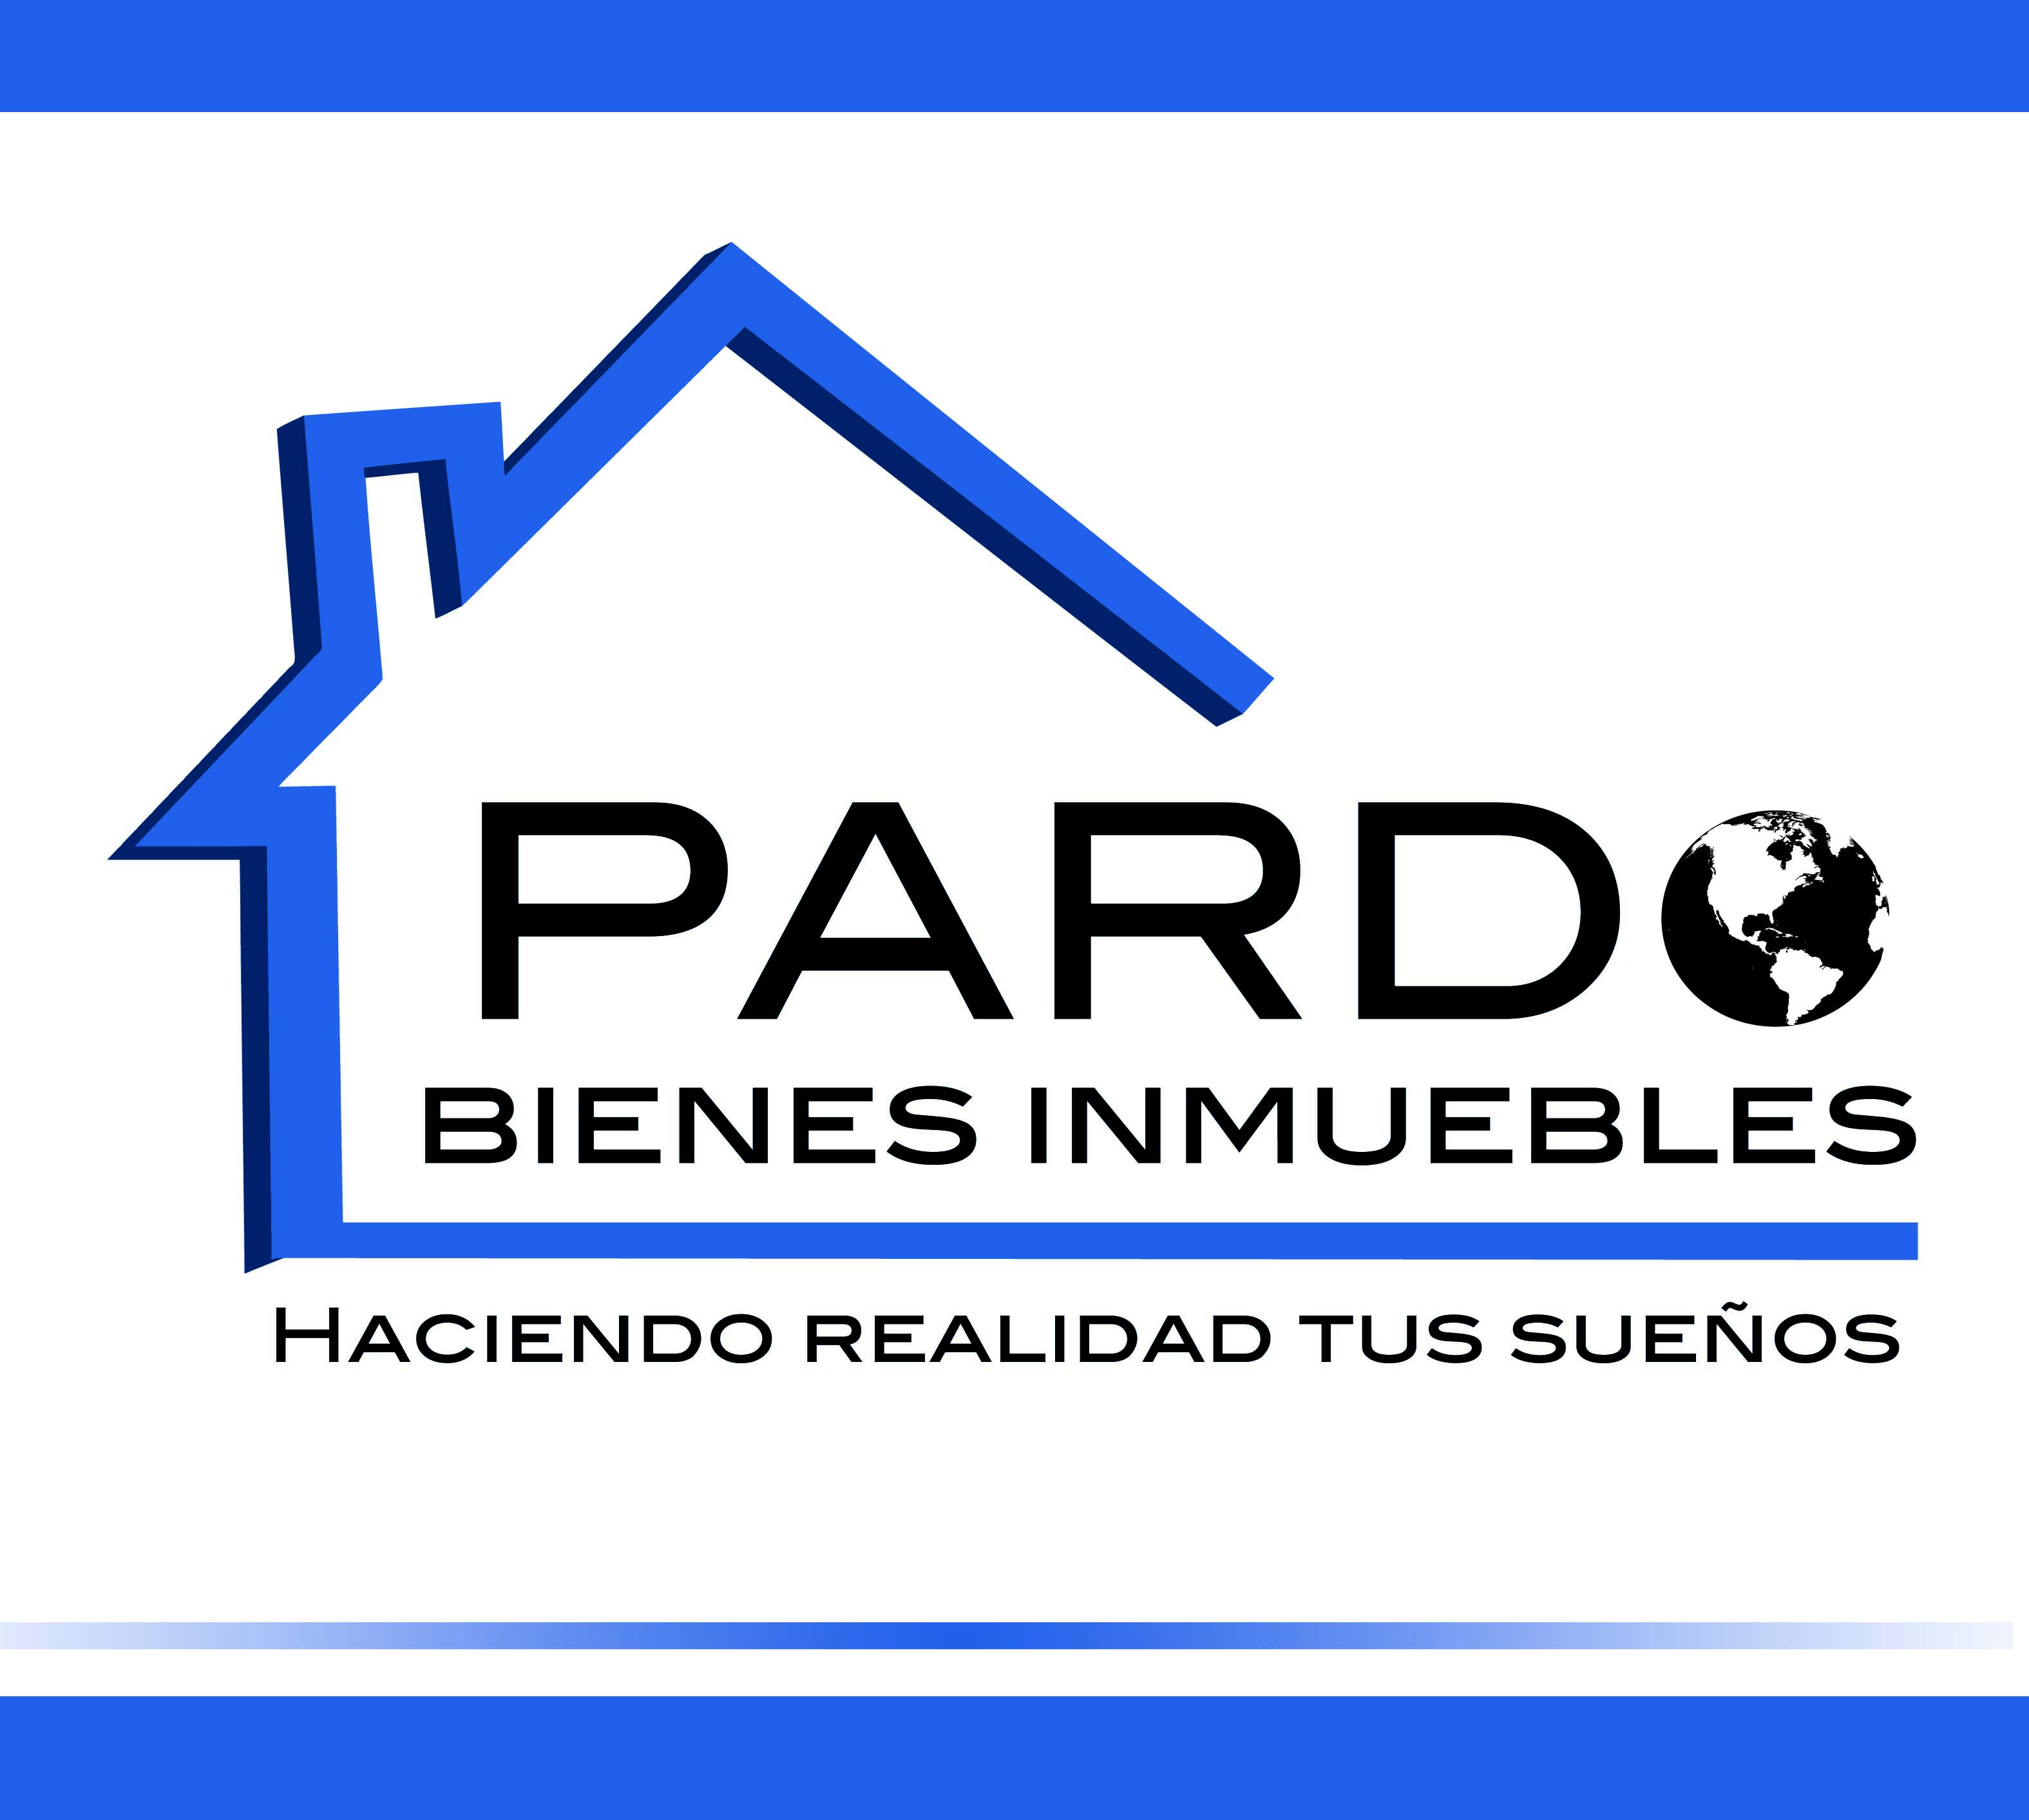 (c) Pardobienesinmuebles.com